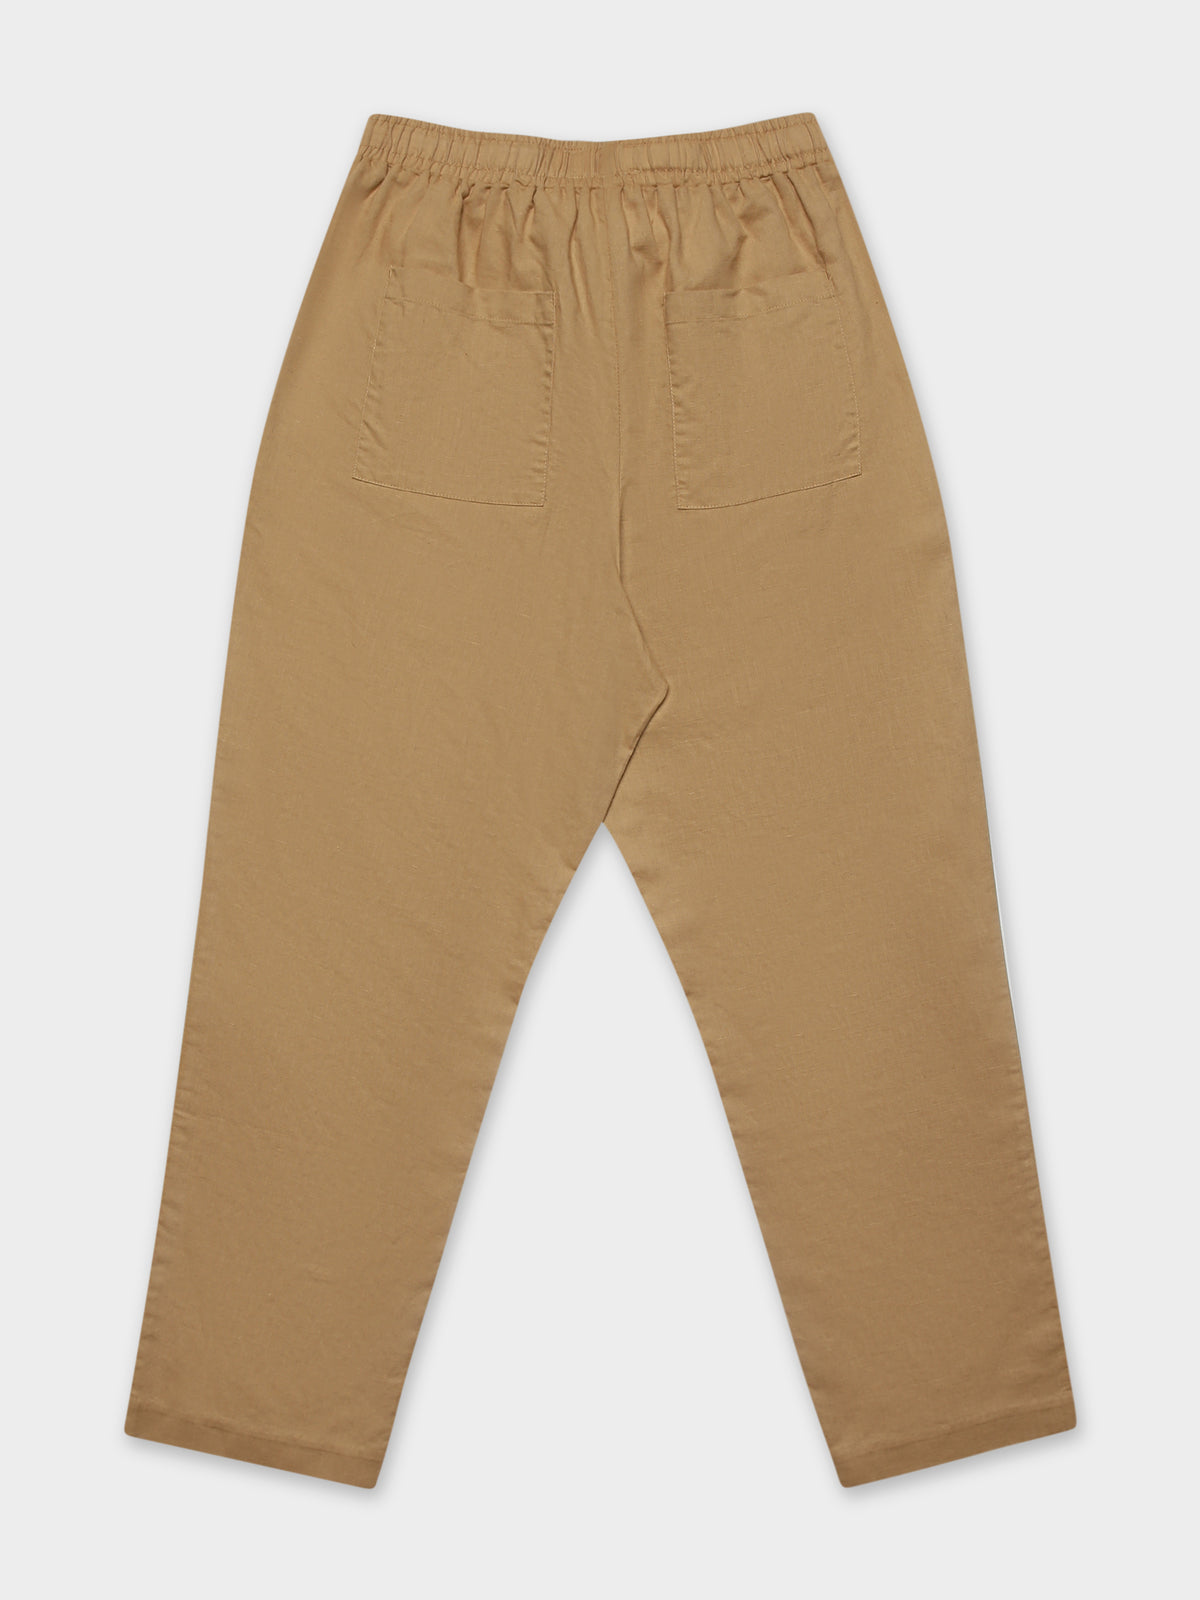 Classic Linen Pants in Caramel Brown